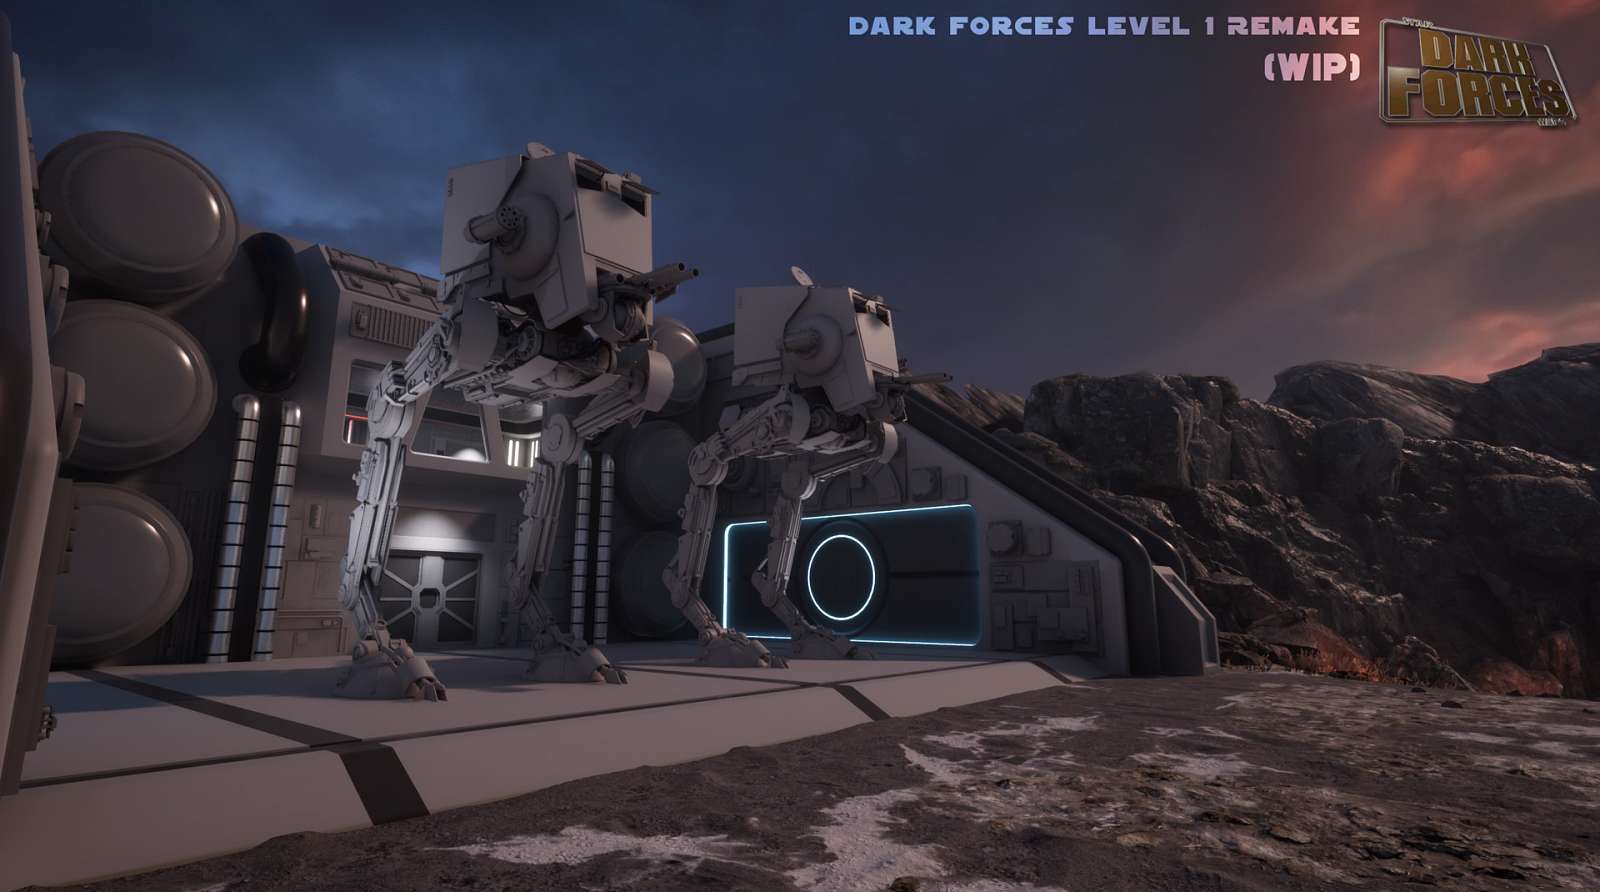 Fanoušek pracuje na remaku hry Star Wars: Dark Forces v Unreal Engine 4